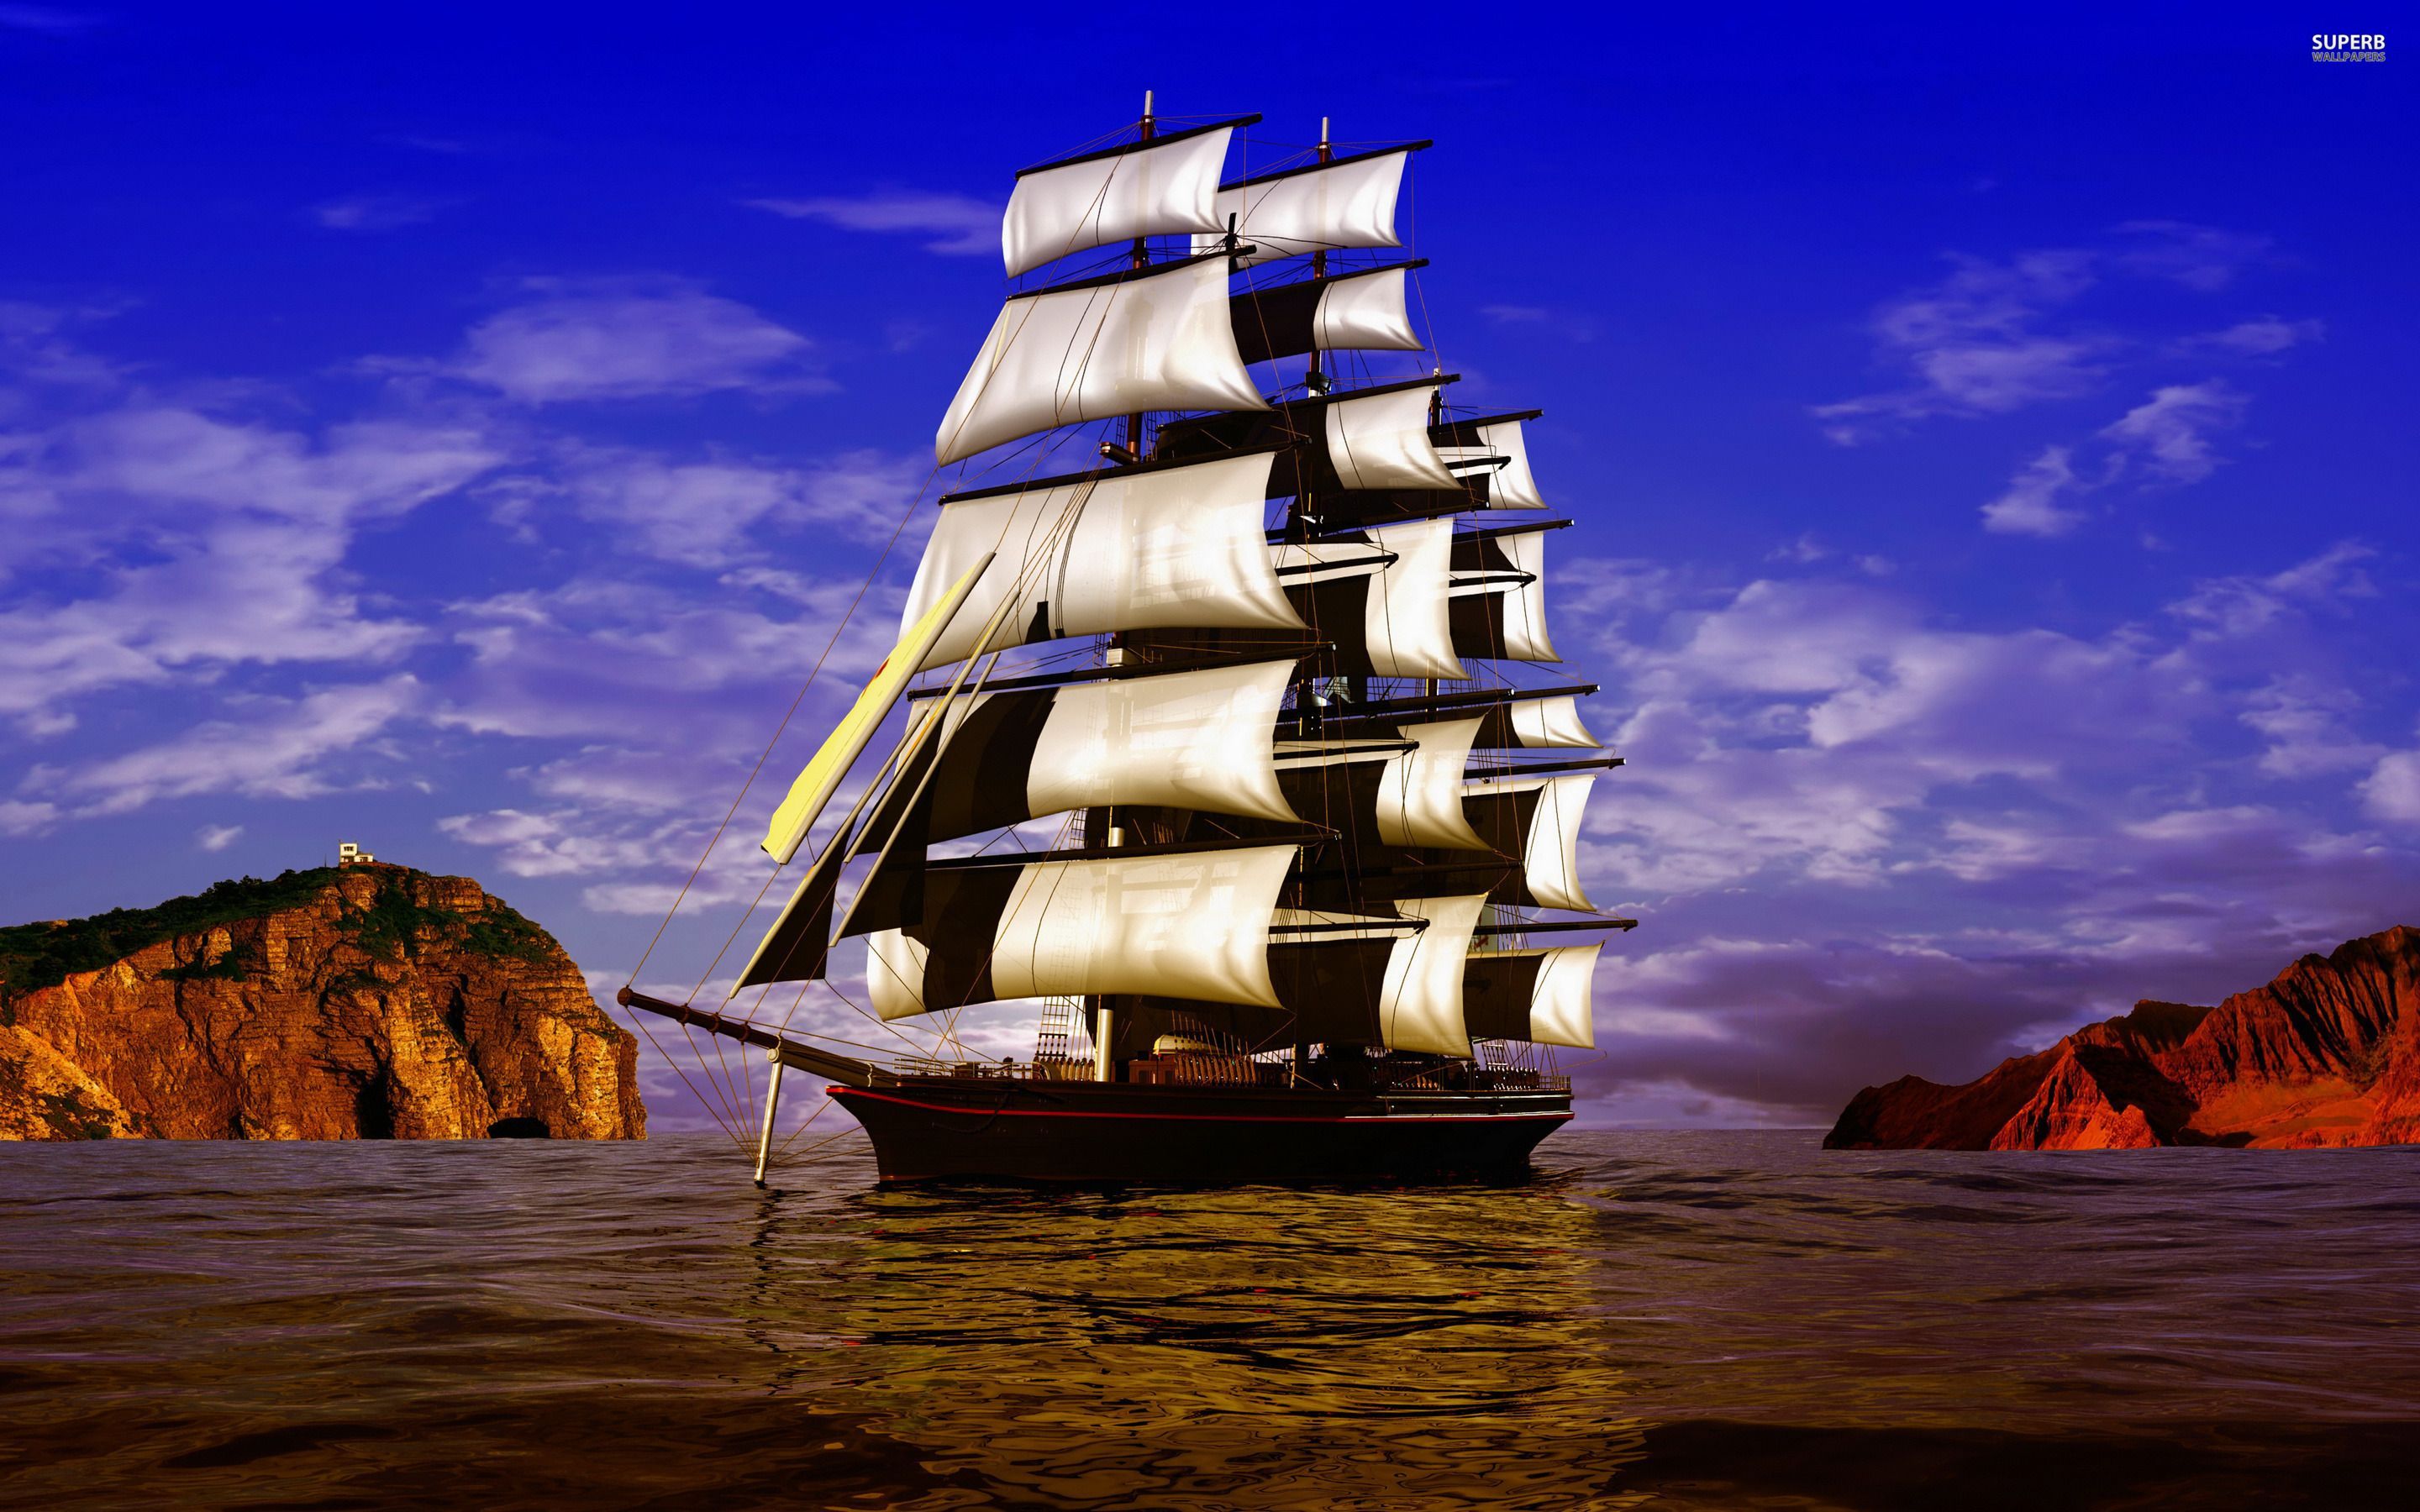 Pirate ship wallpaper - Fantasy wallpapers